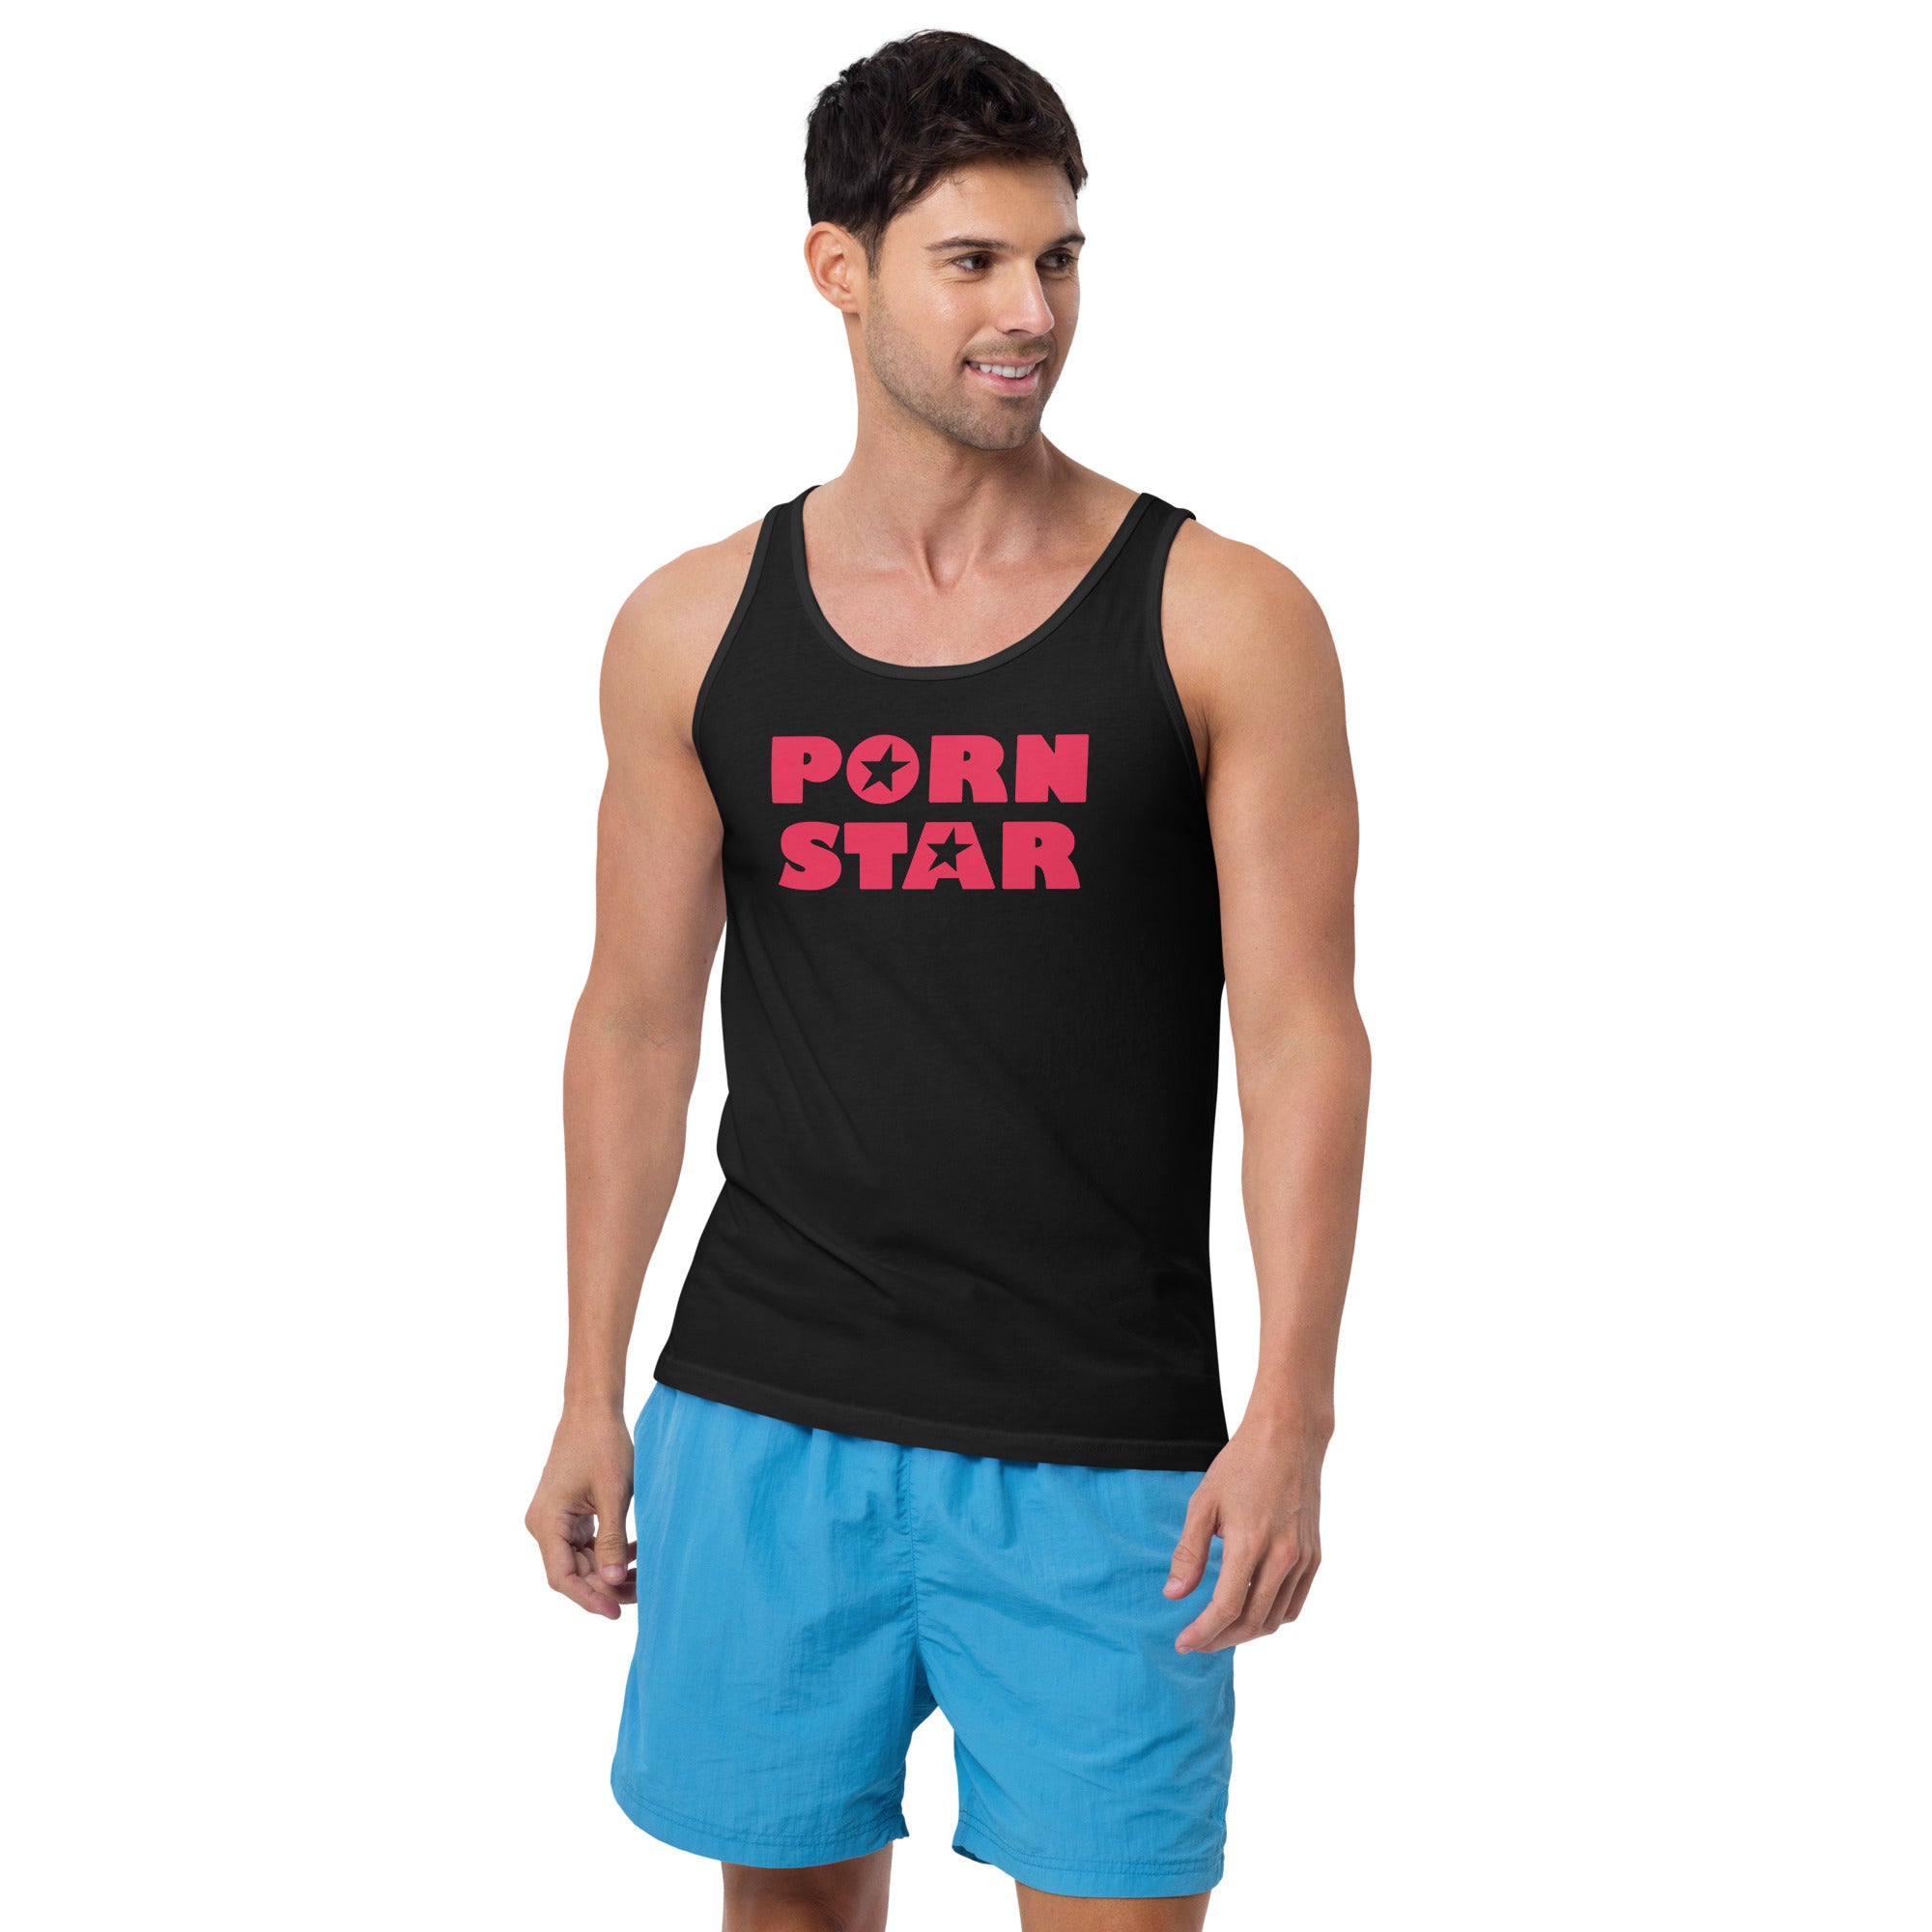 Red Porn Star Logo Men's Tank Top Shirt